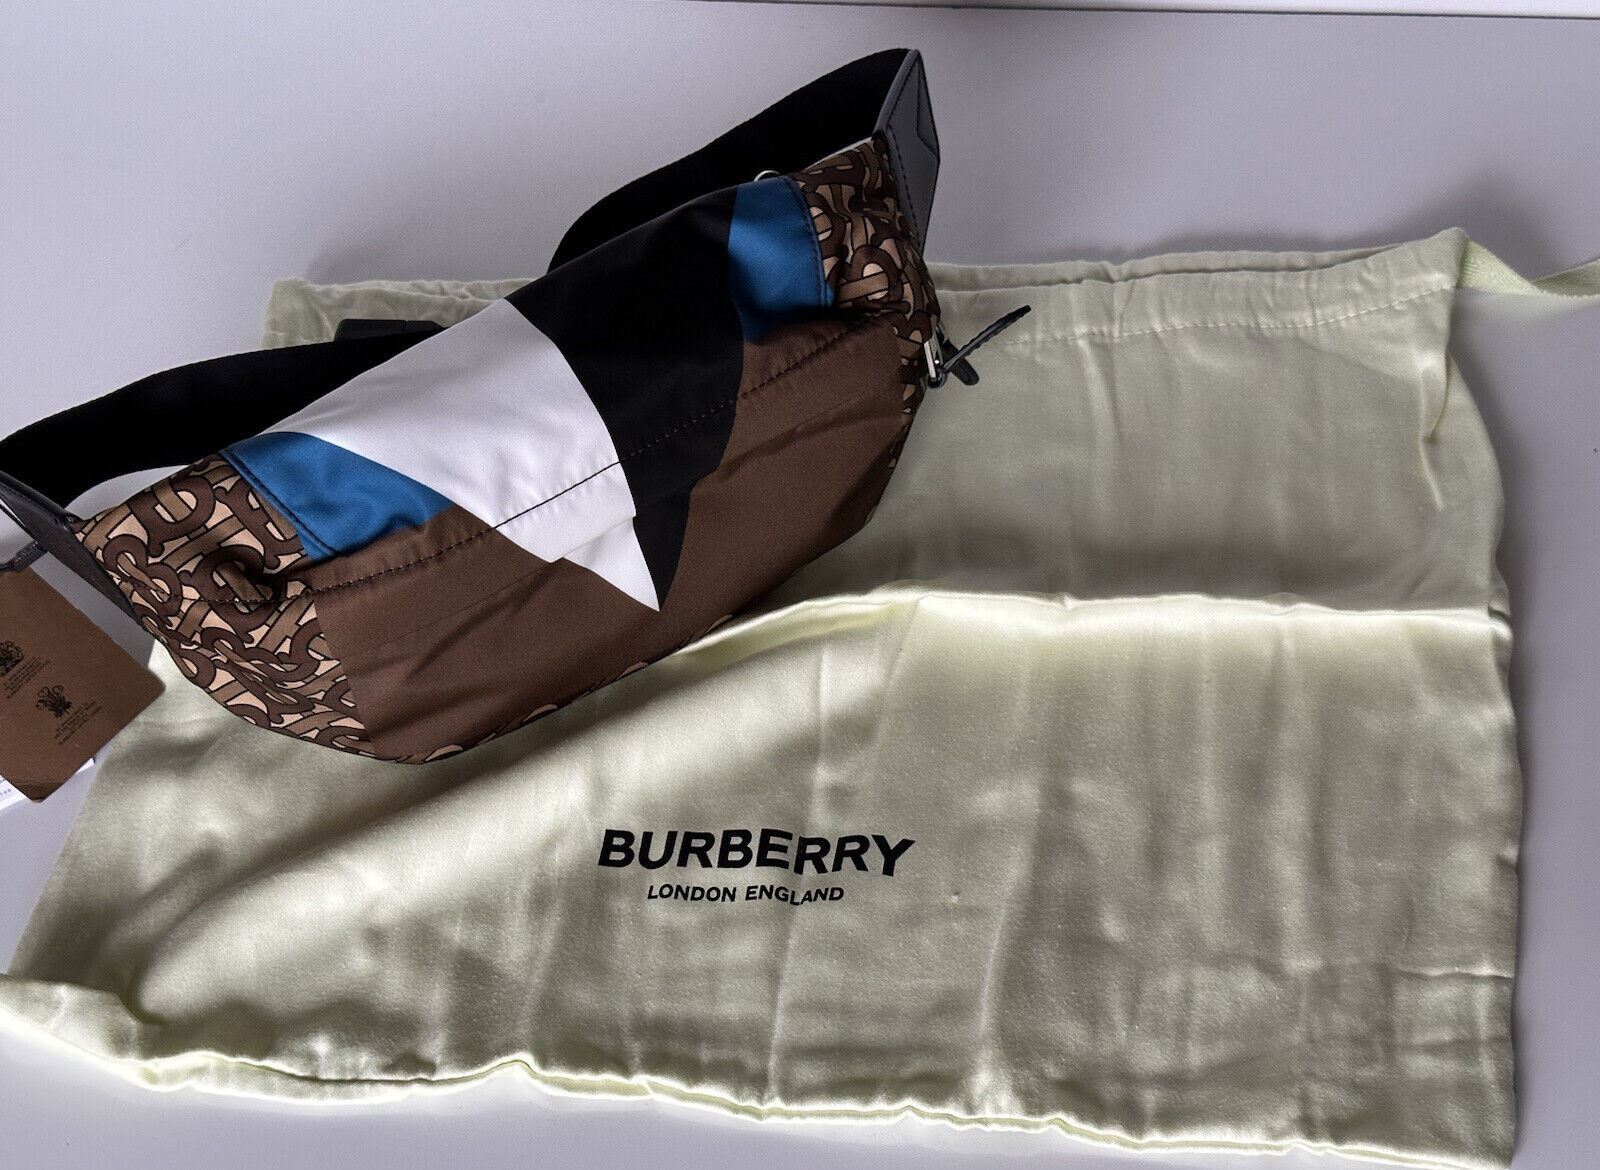 Neu mit Etikett: 1.000 $ Burberry TB Monogram Print Sonny Brown Gürtel/Taille/Body Bag 80448311 